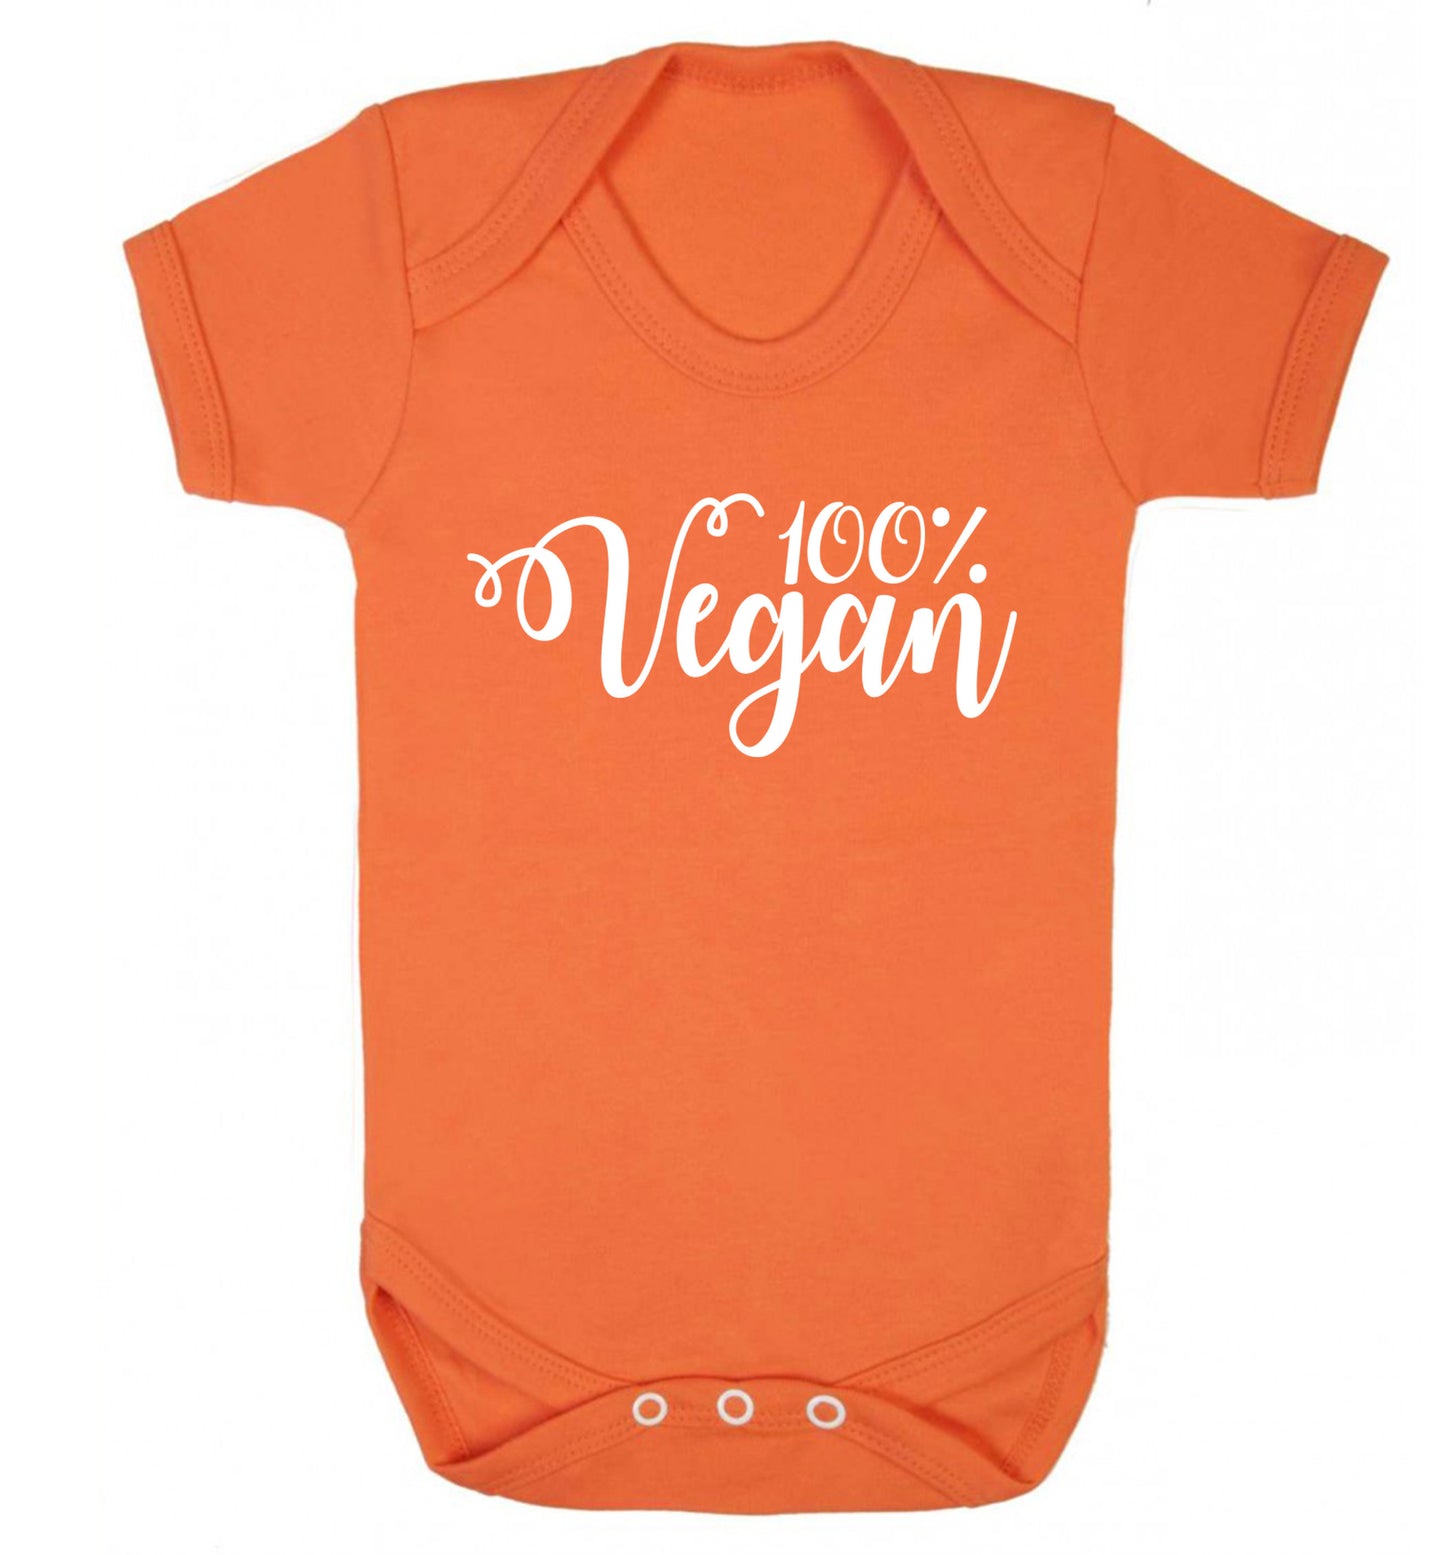 100% Vegan Baby Vest orange 18-24 months